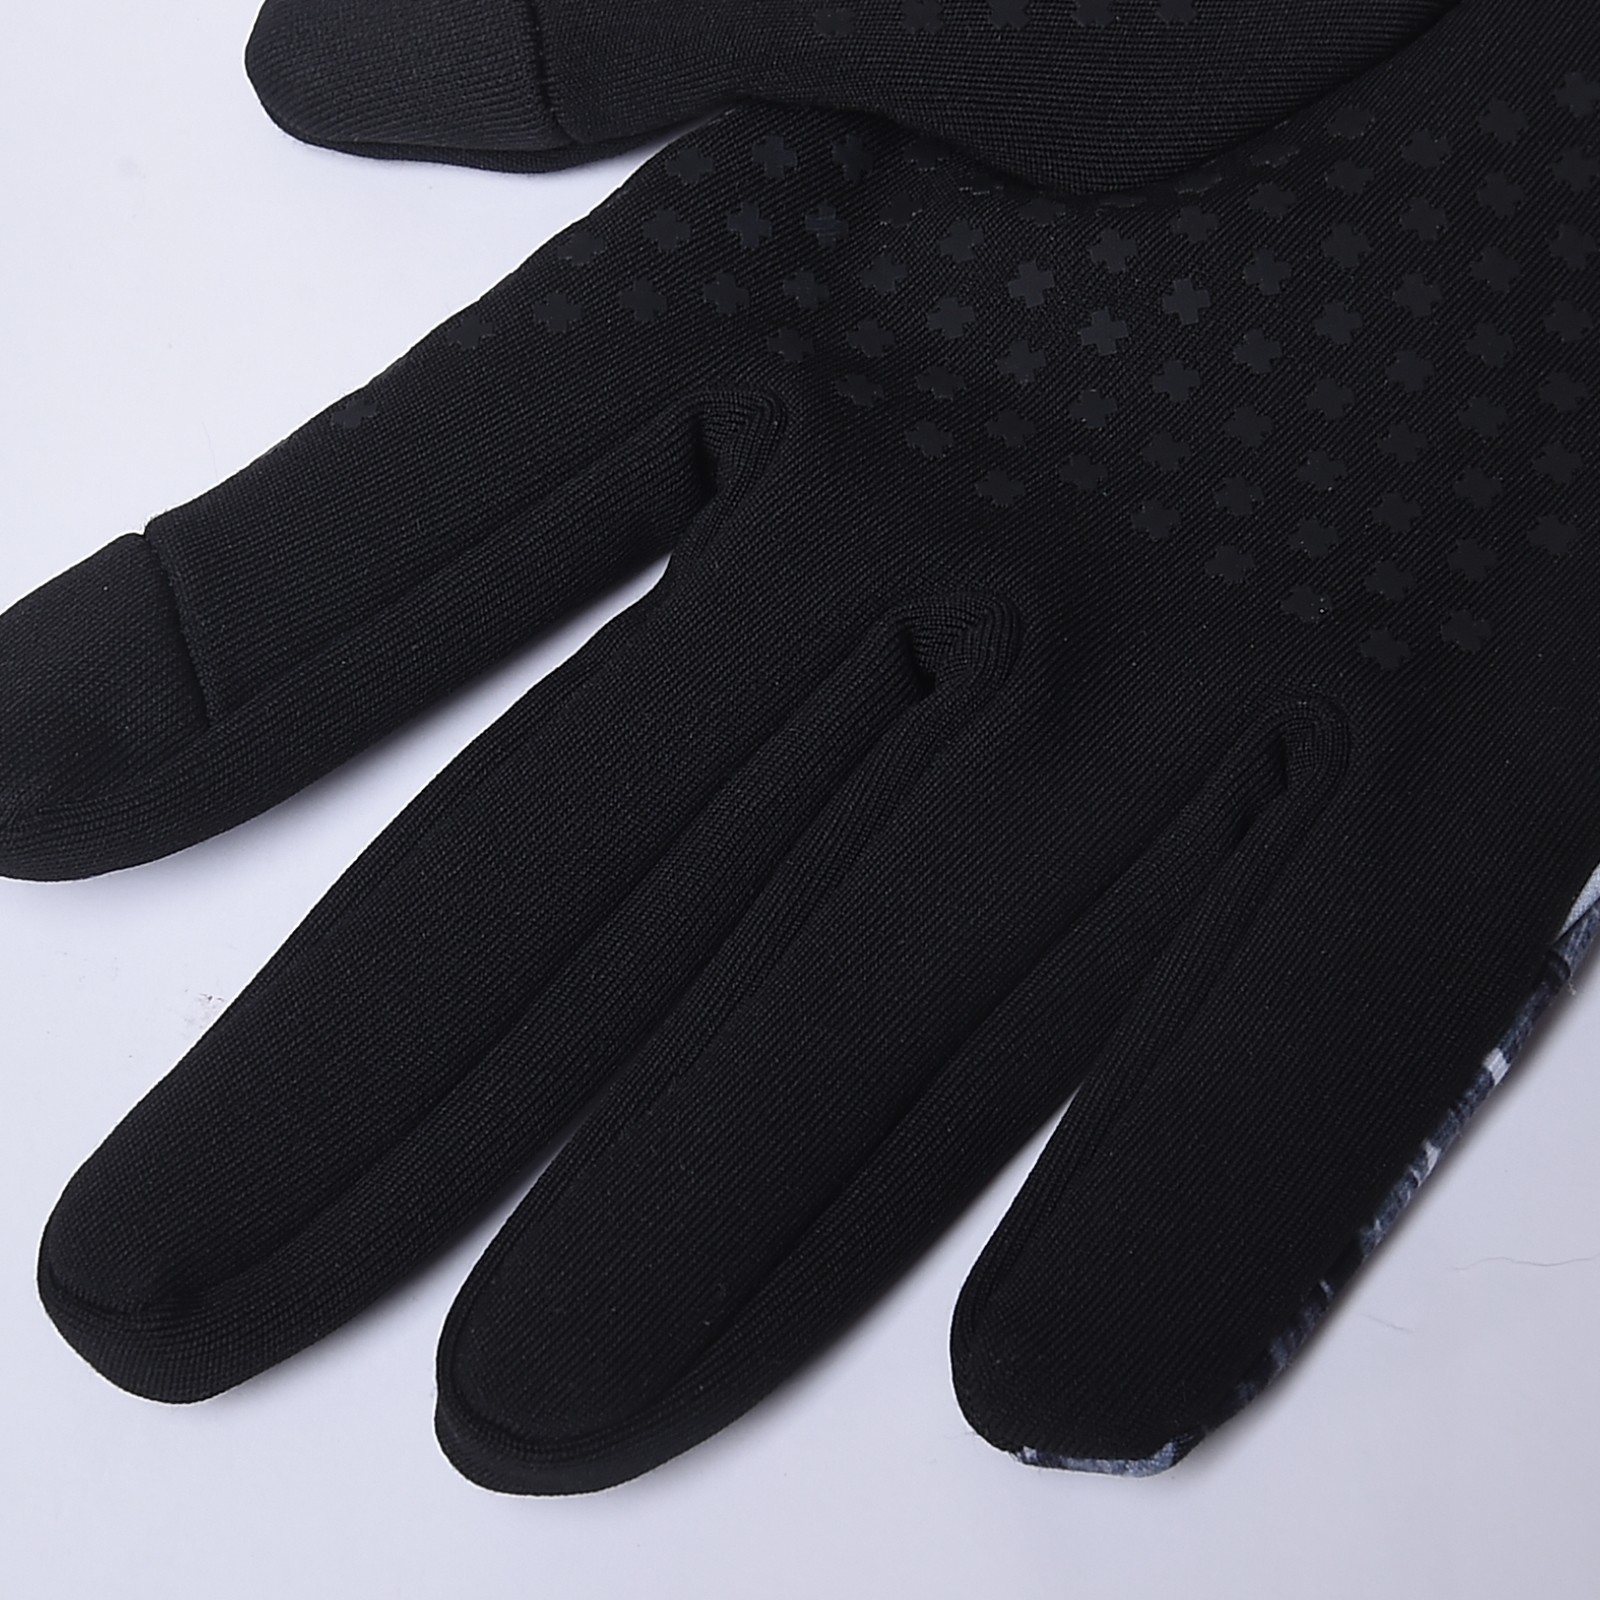 AONIJIE M-57 Sports Gloves Men Women Autumn Winter Warm Plush Gloves Touch Screen Mittens for Outdoor Running Climbing Hiking